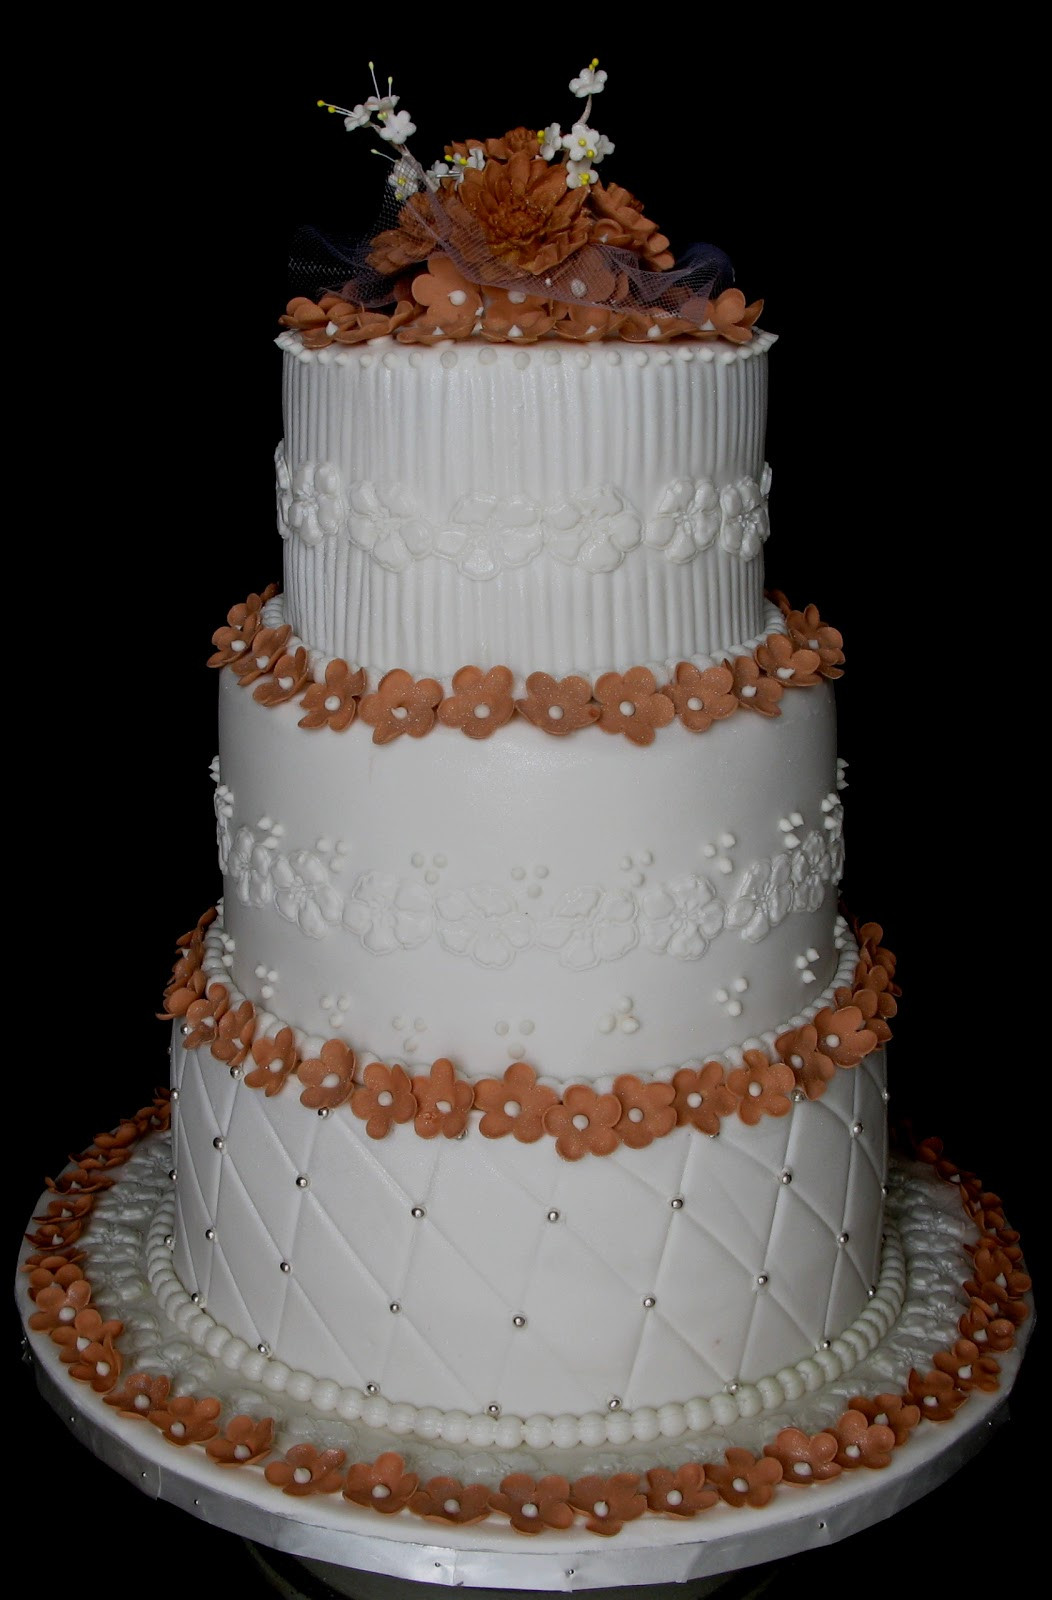 Two Layered Wedding Cakes
 3 layered wedding cake idea in 2017